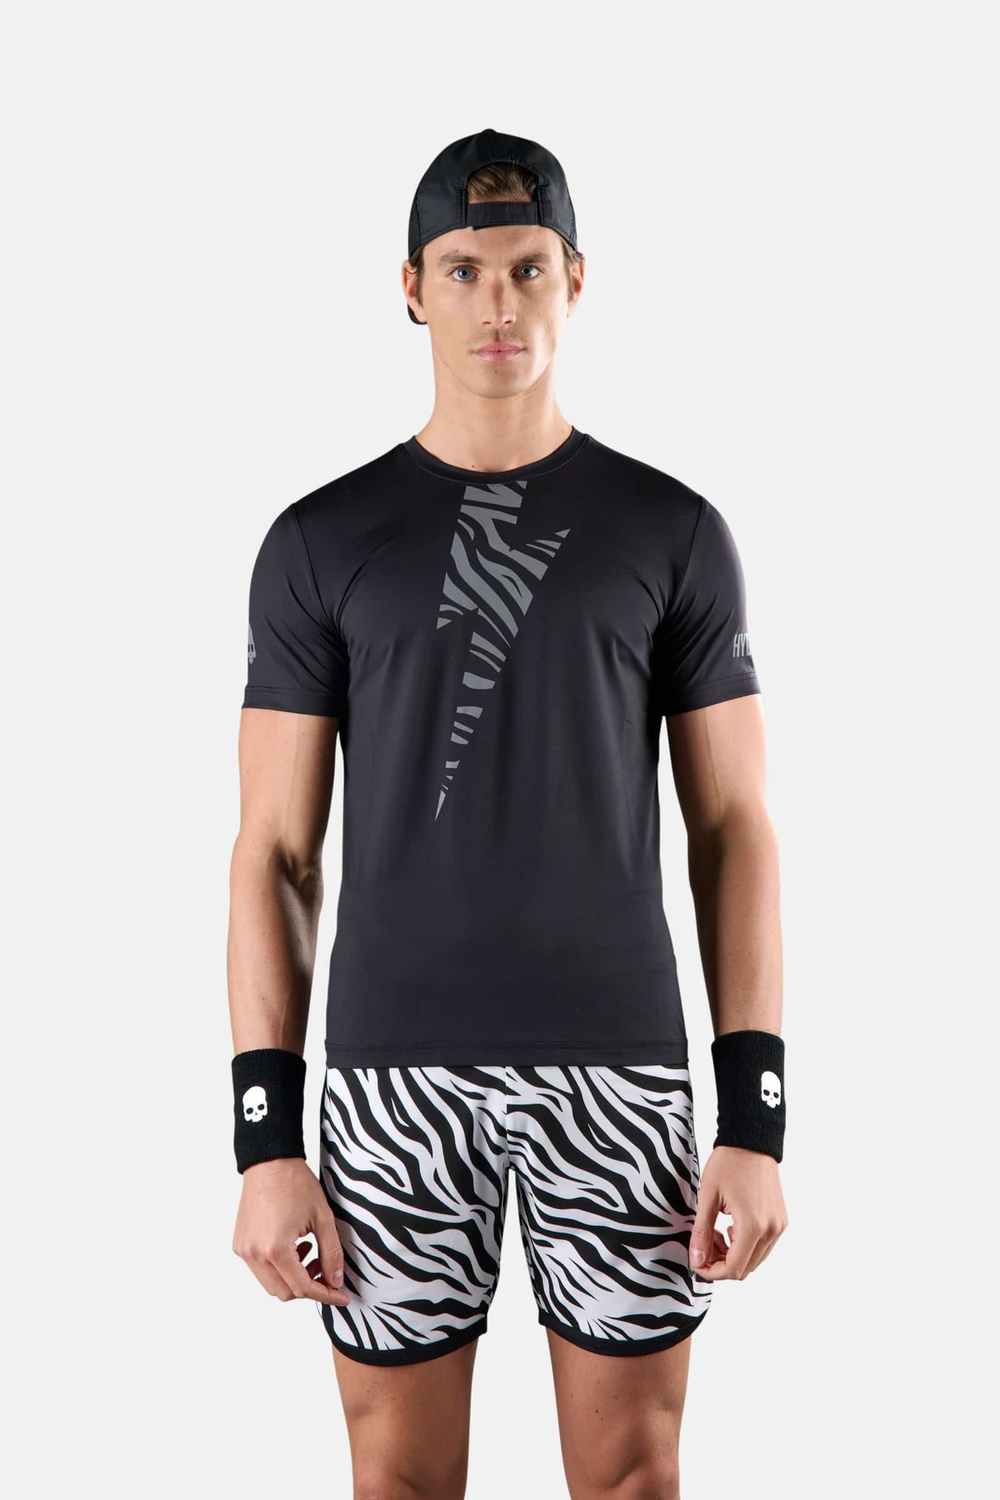 Мужская теннисная футболка  HYDROGEN TIGER TECH (T00700-816)